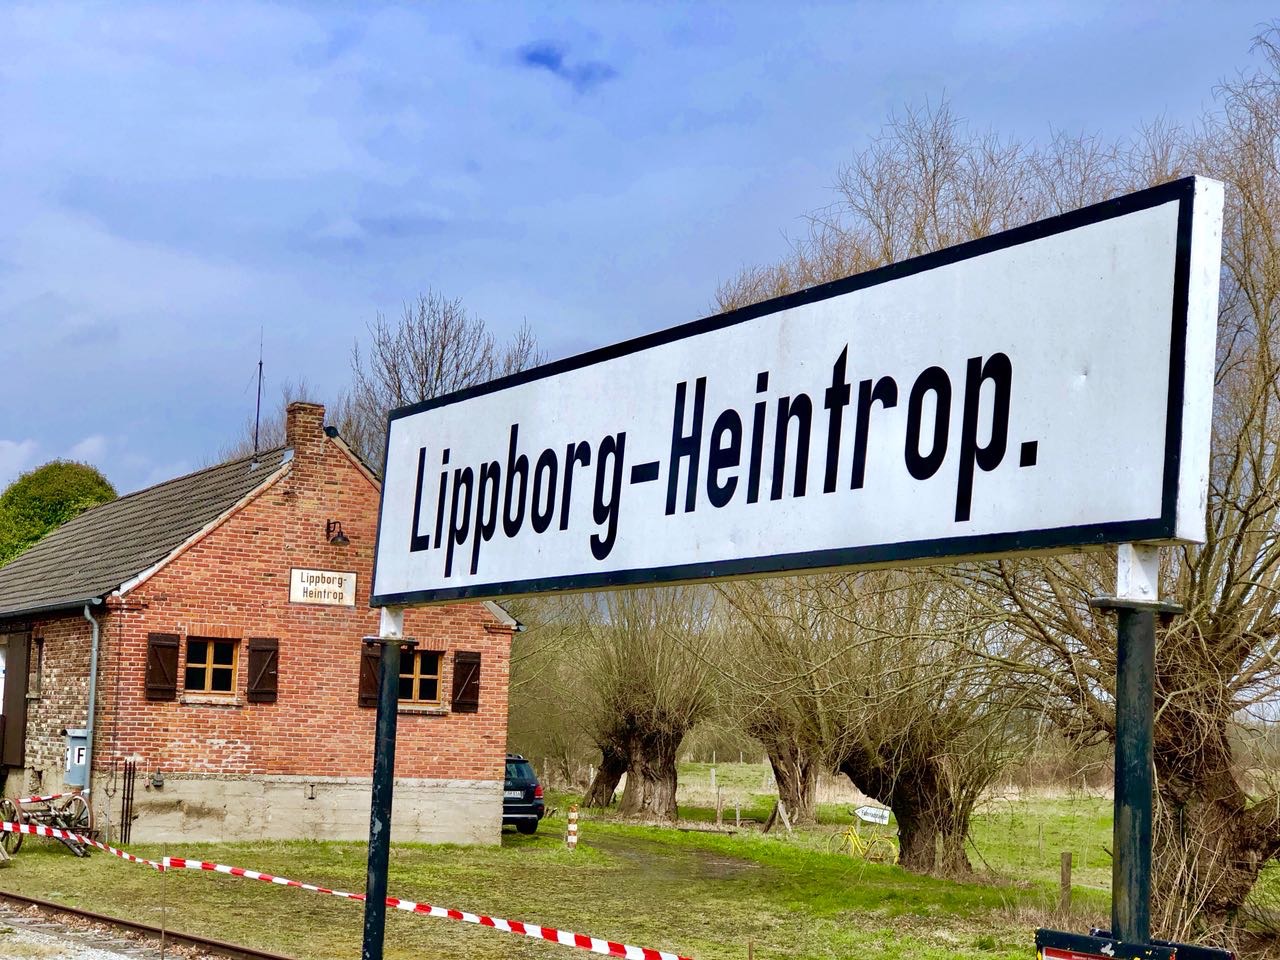 Bahnhof Lippborg-Heintrop